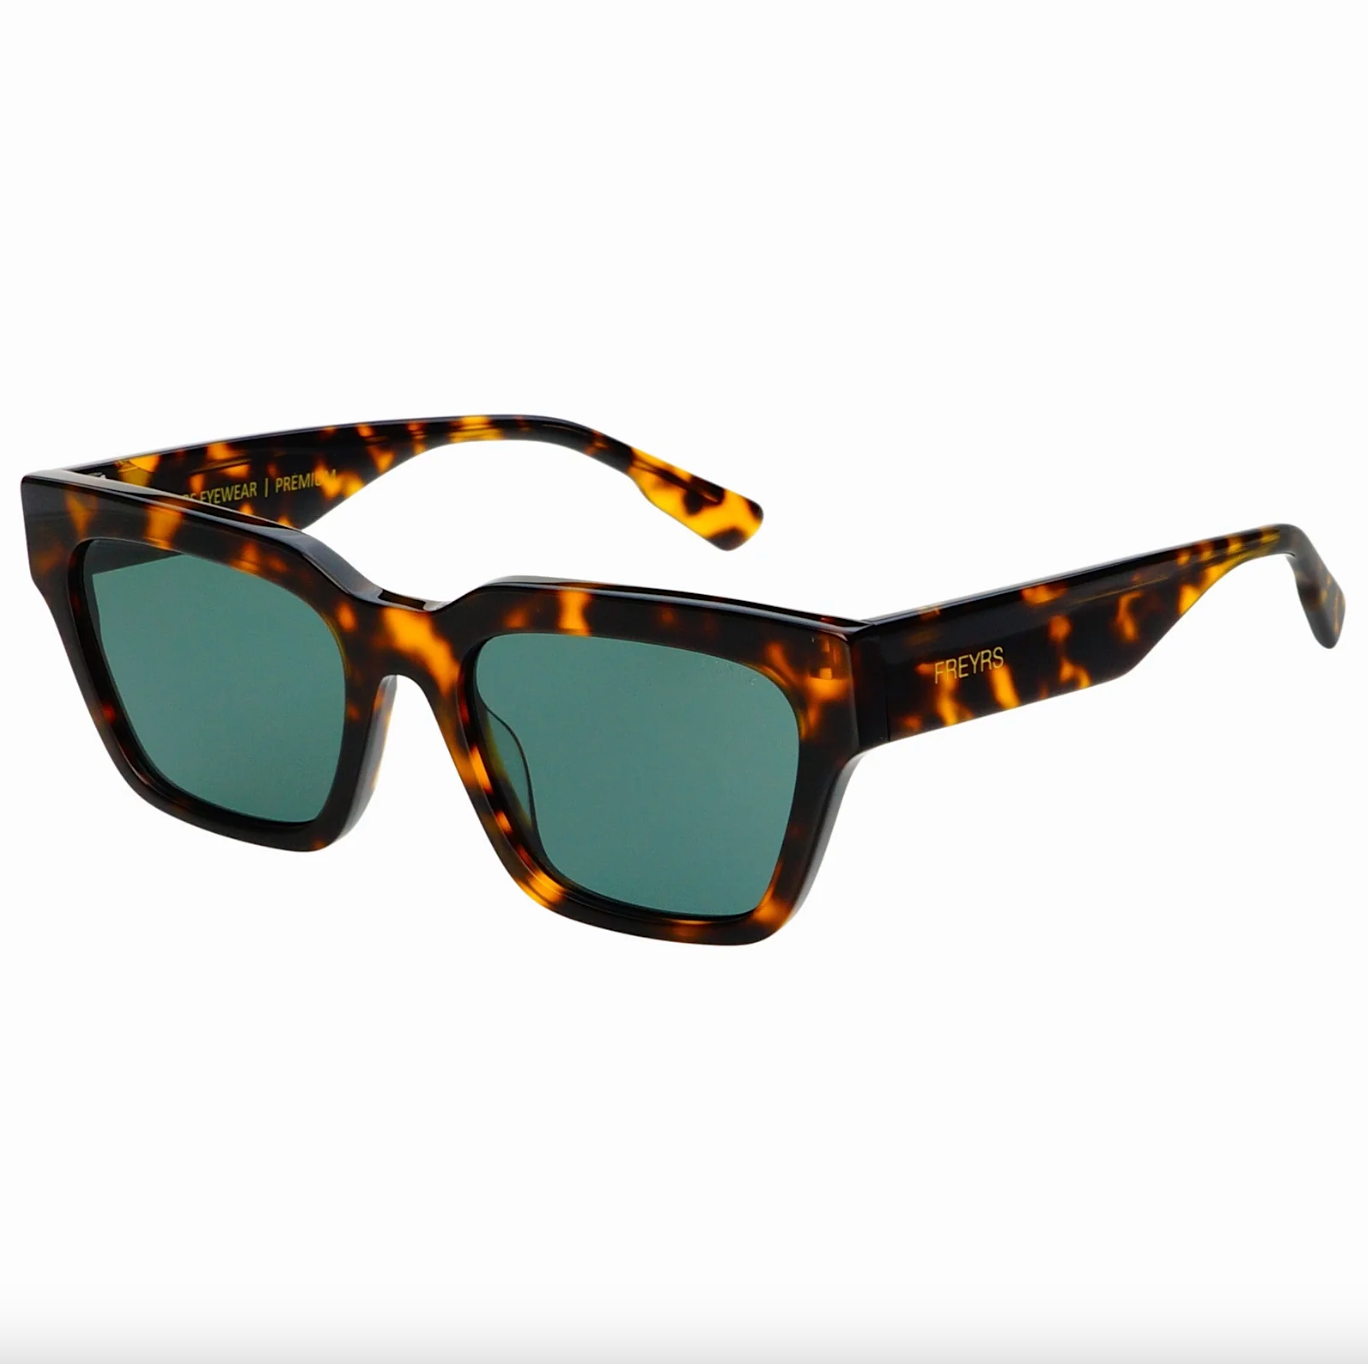 hayden freyrs sunglasses